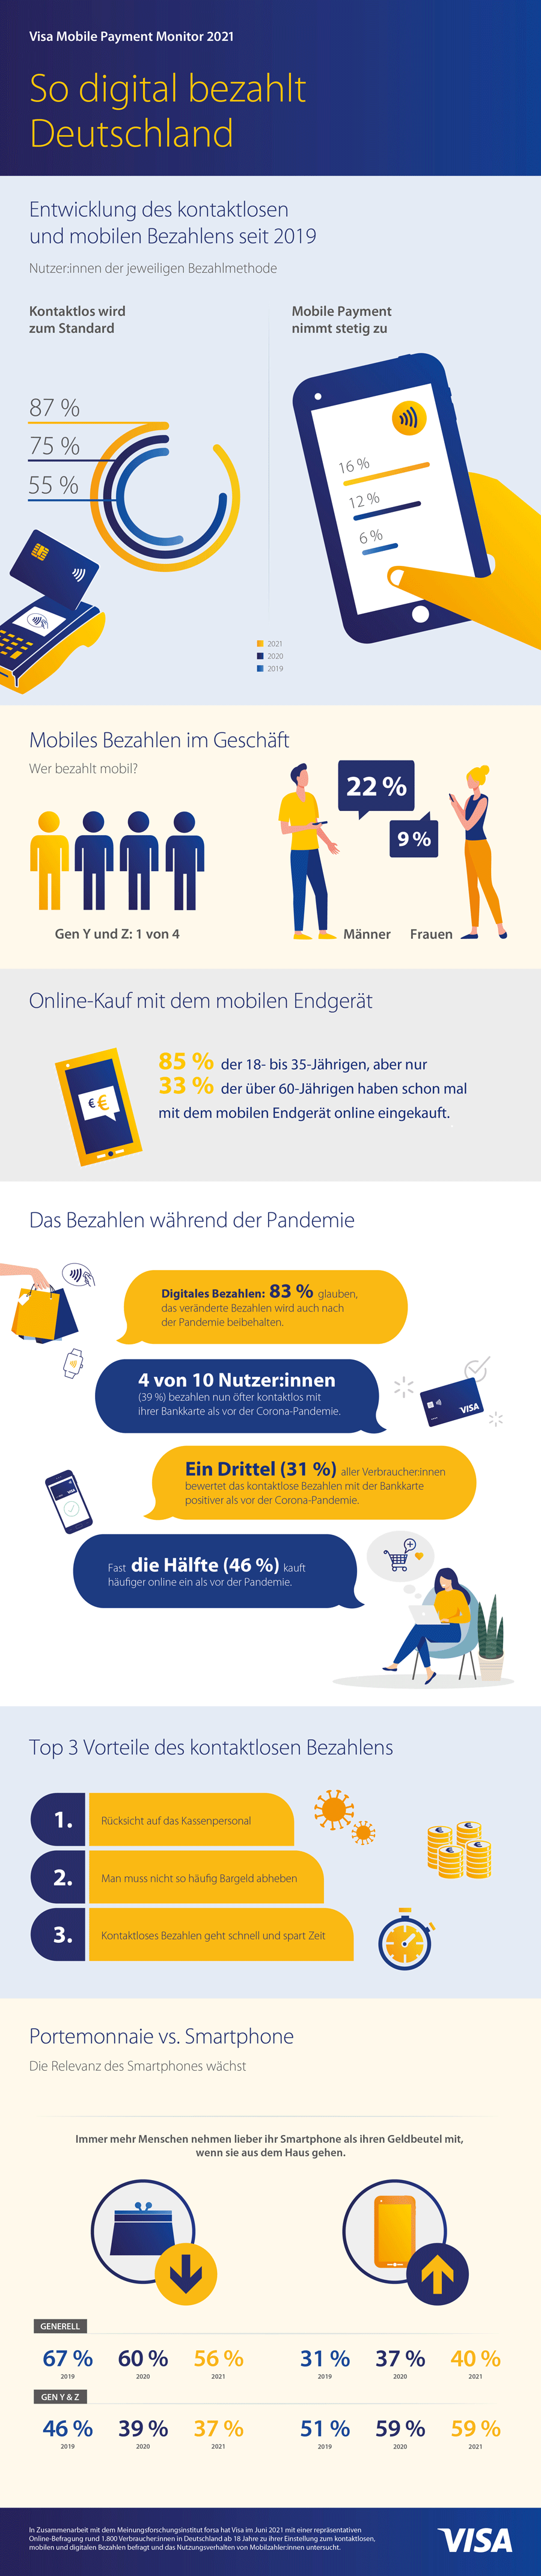 Infografik: Digitales Bezahlen in Deutschland 2021